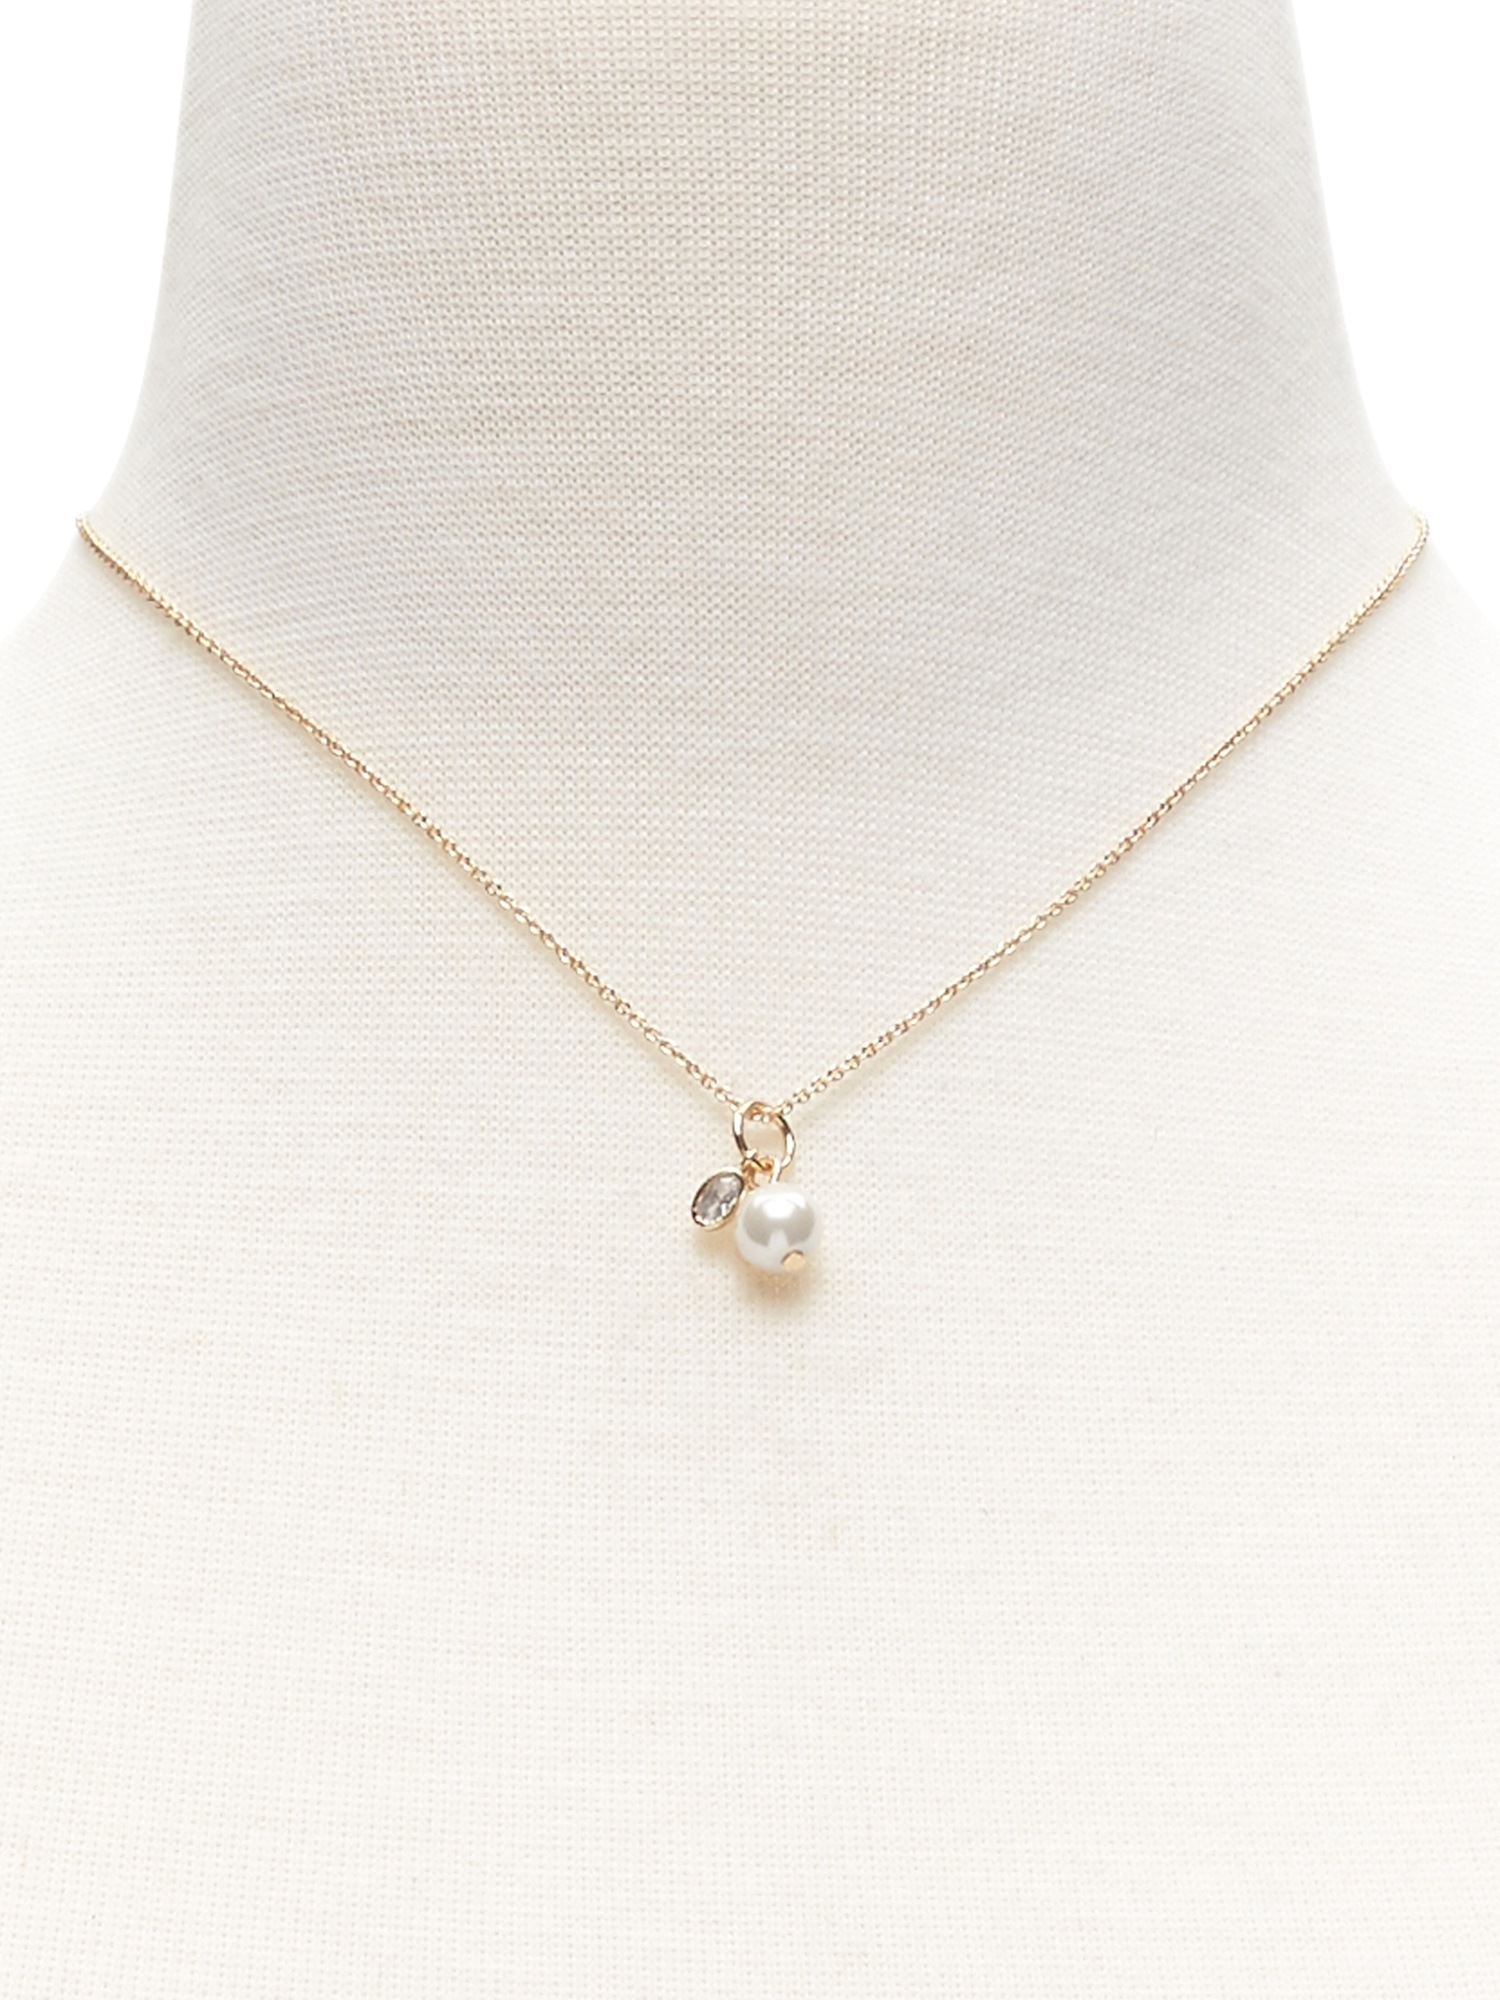 Pearl Delicate Pendant Necklace